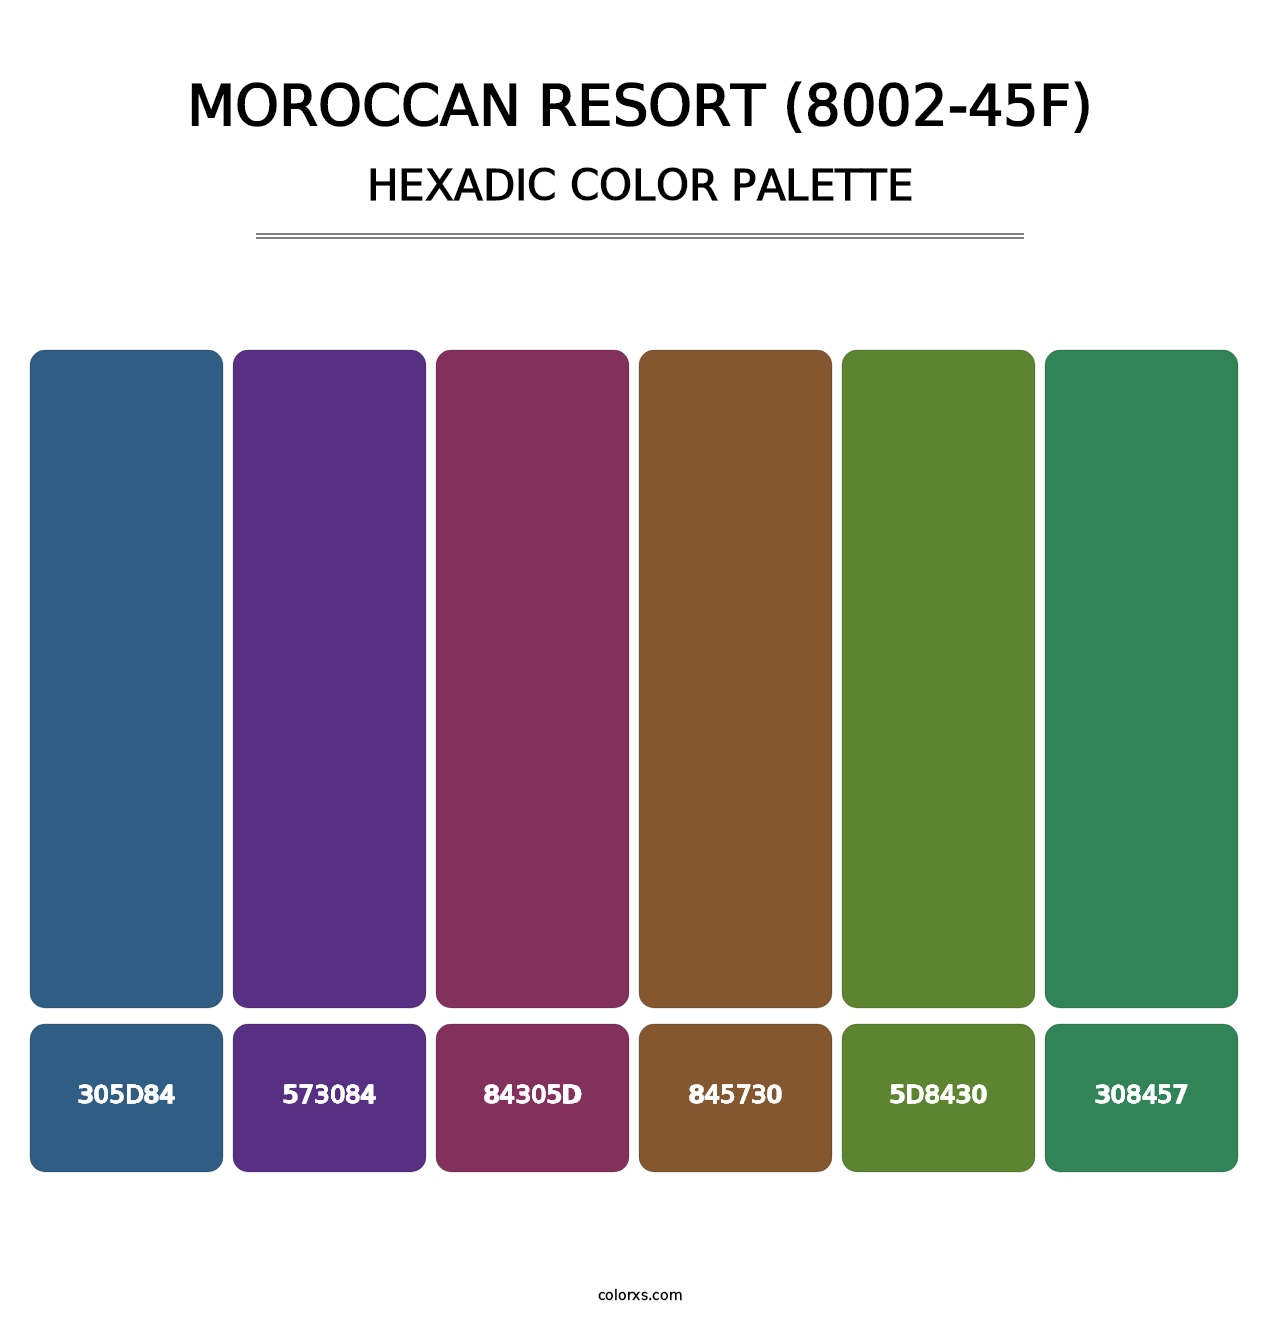 Moroccan Resort (8002-45F) - Hexadic Color Palette